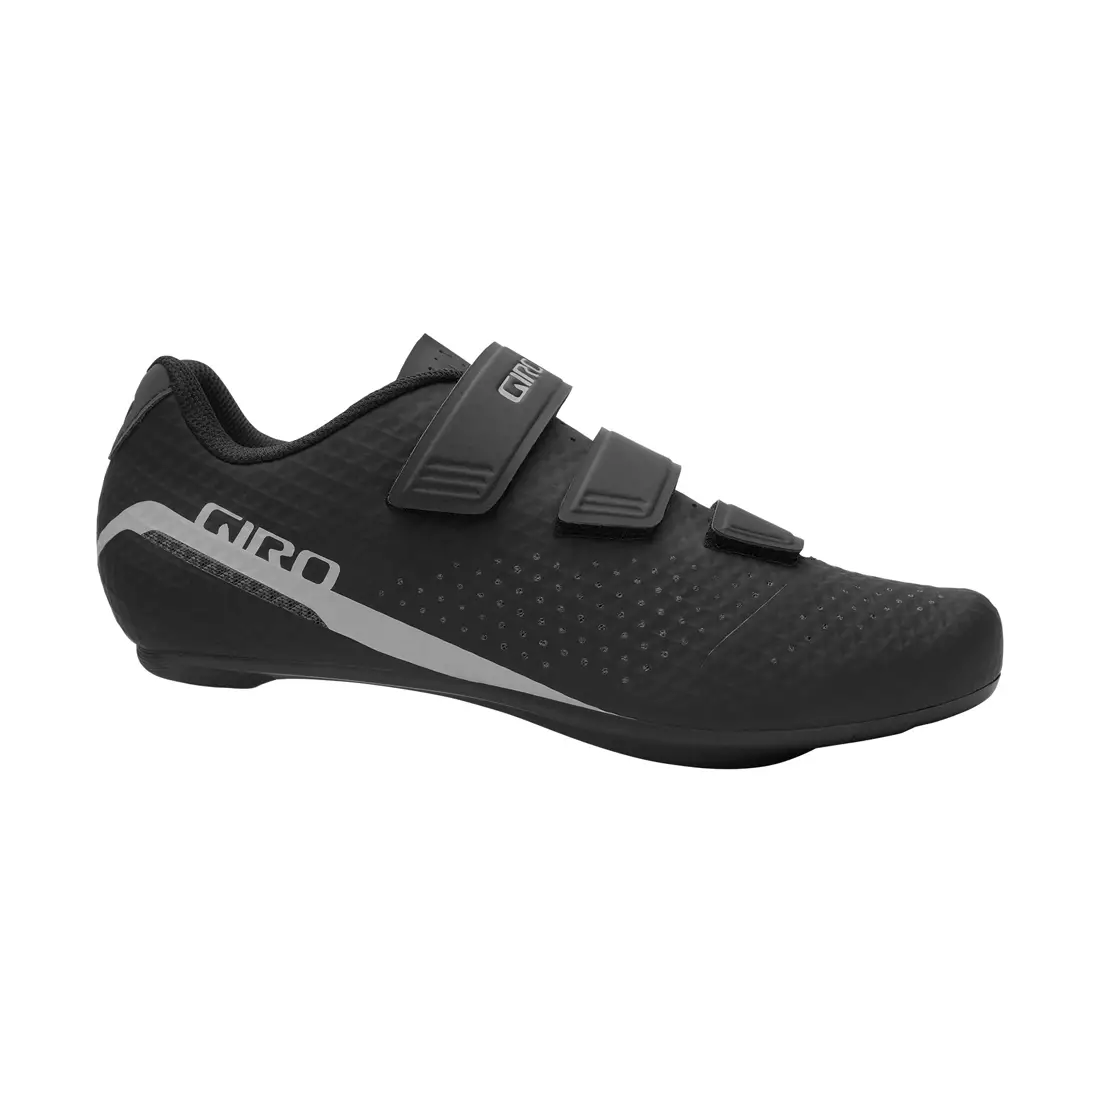 GIRO men's bicycle shoes STYLUS black 